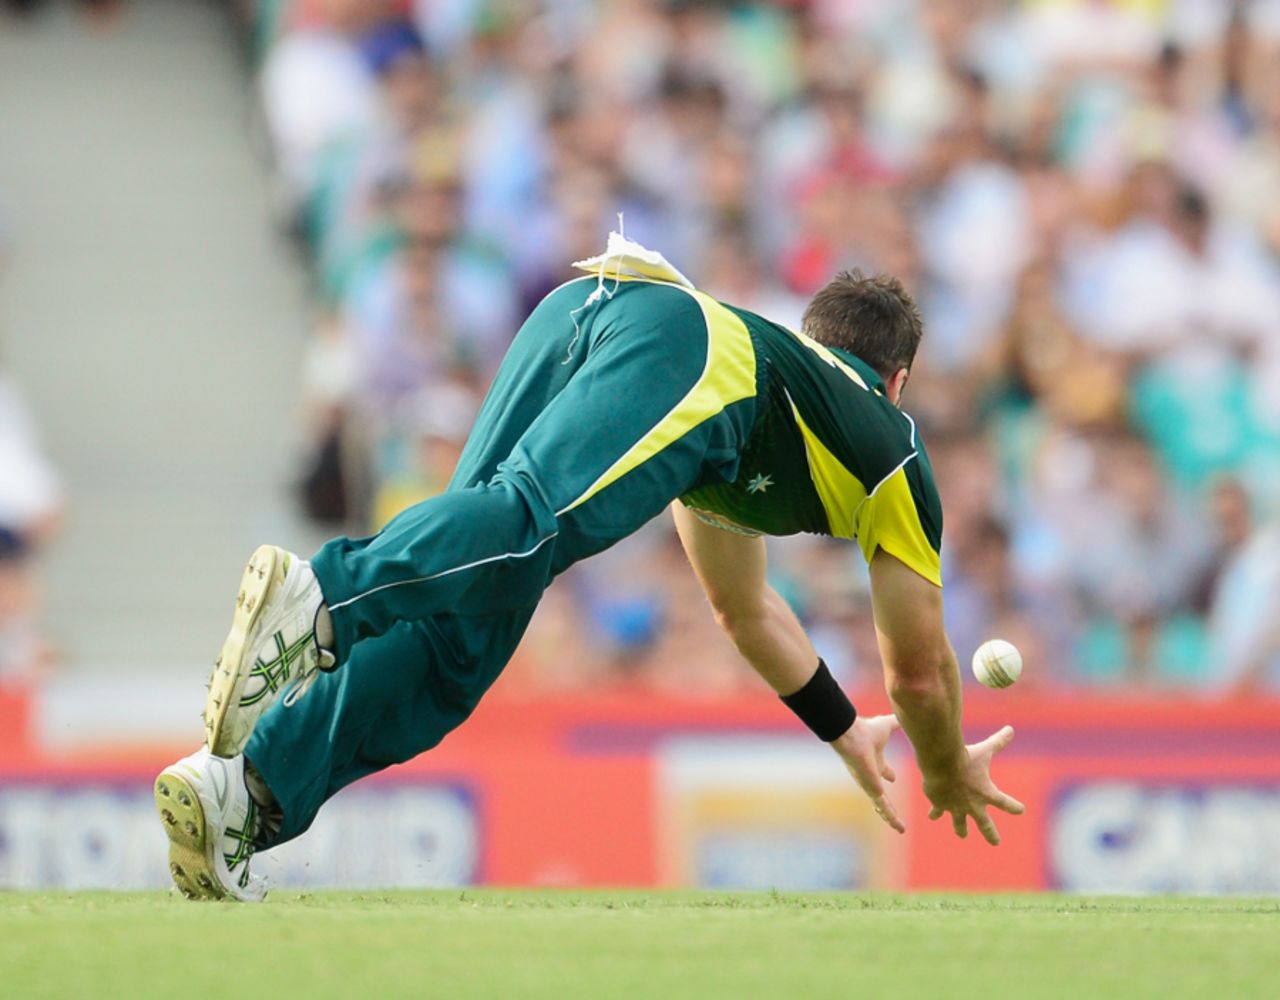 Daniel Christian dives forward to catch Eoin Morgan's leading edge, Australia v England, 3rd ODI, Sydney, January 19, 2014